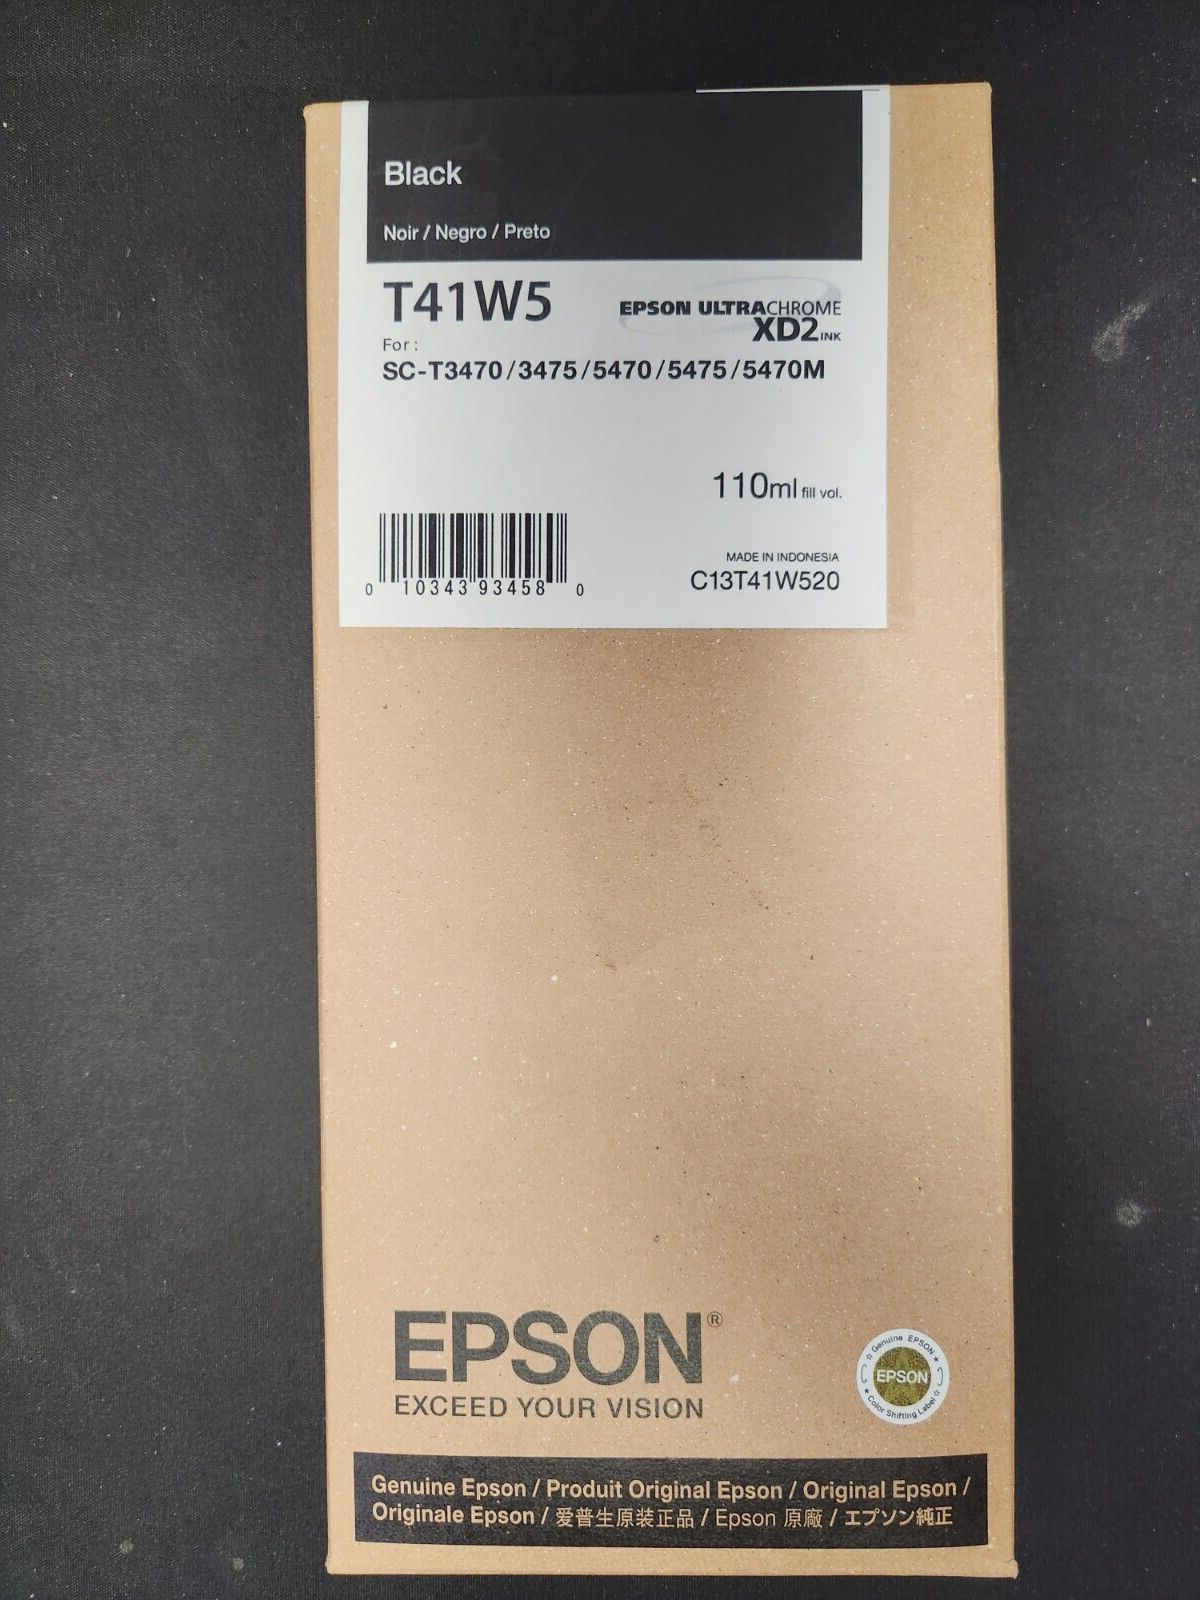 Epson UltraChrome XD2 T41W5 Black Ink Cartridge C13T41W520 Best By 08/2026